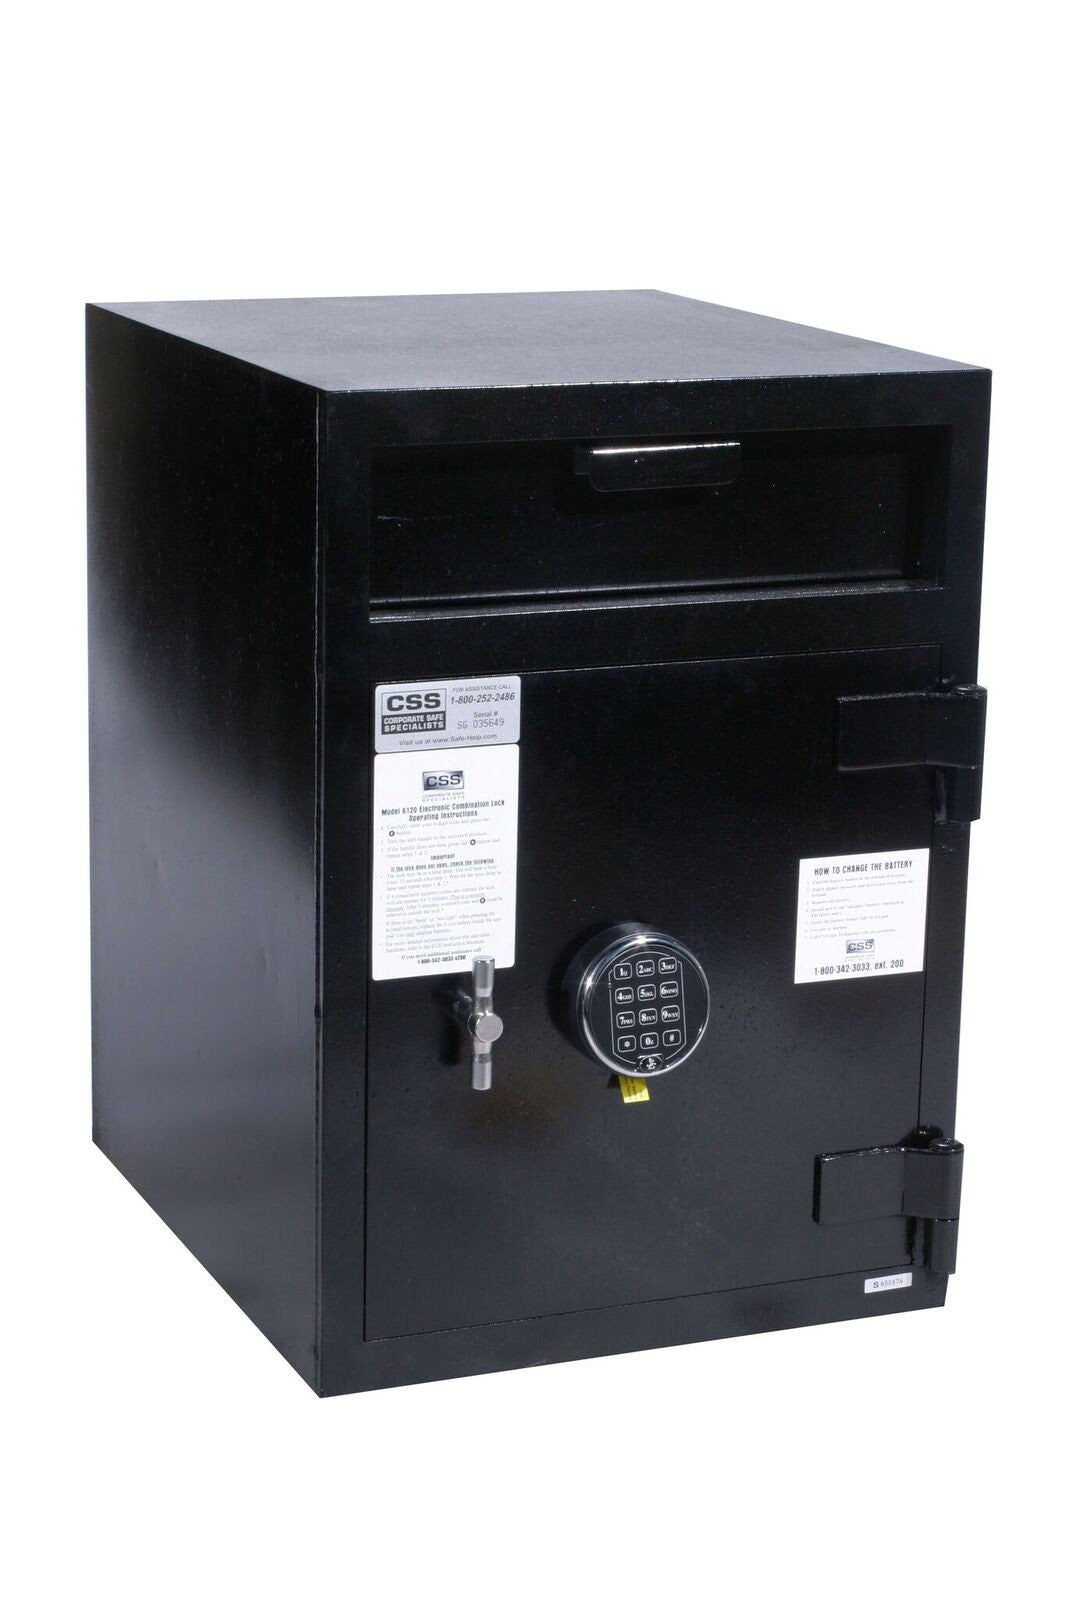 Cennox MB2720ICHFK1SG40 Depository Safe with Internal Locker